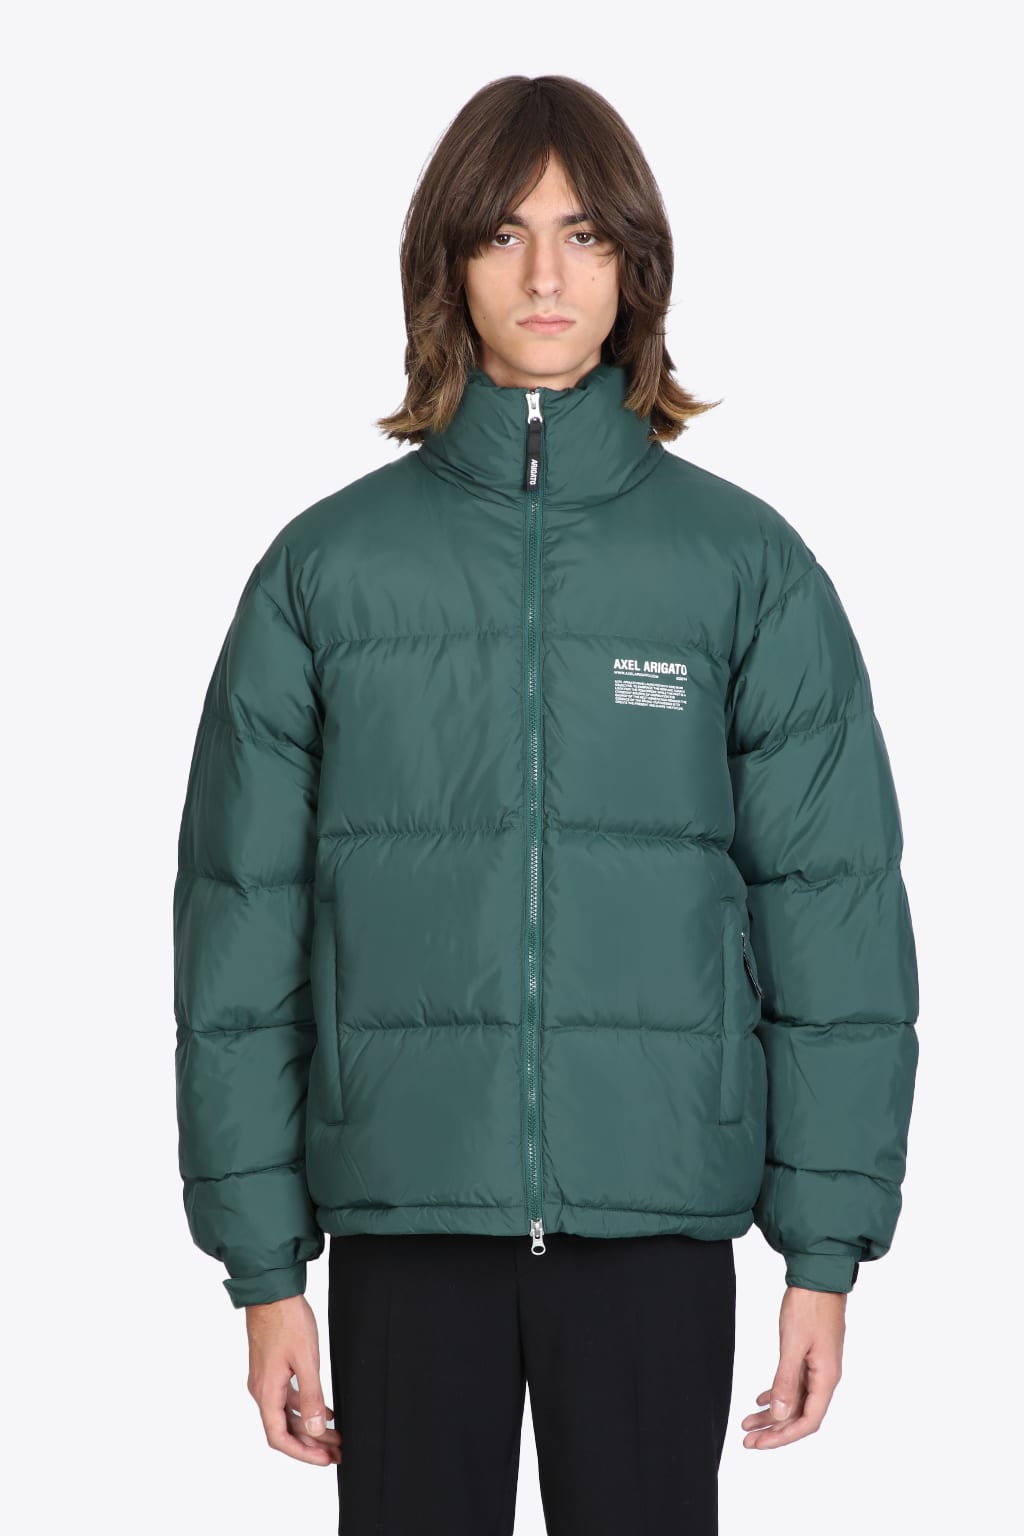 Axel Arigato Observer Puffer Jacket Green nylon oversized puffer jacket - Observer puffer jacket